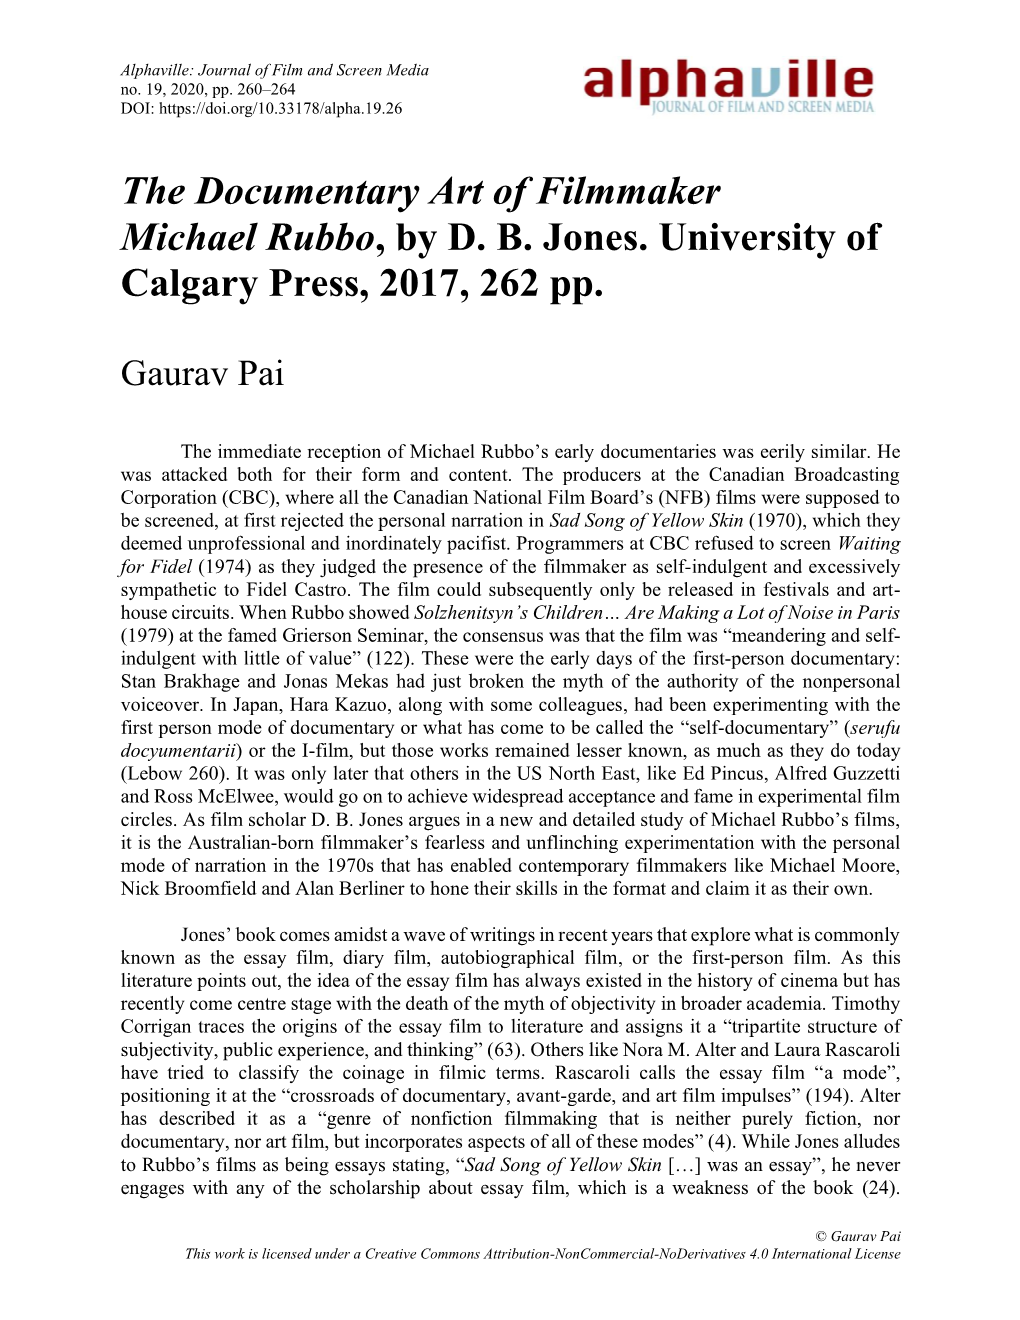 The Documentary Art of Filmmaker Michael Rubbo, by D. B. Jones